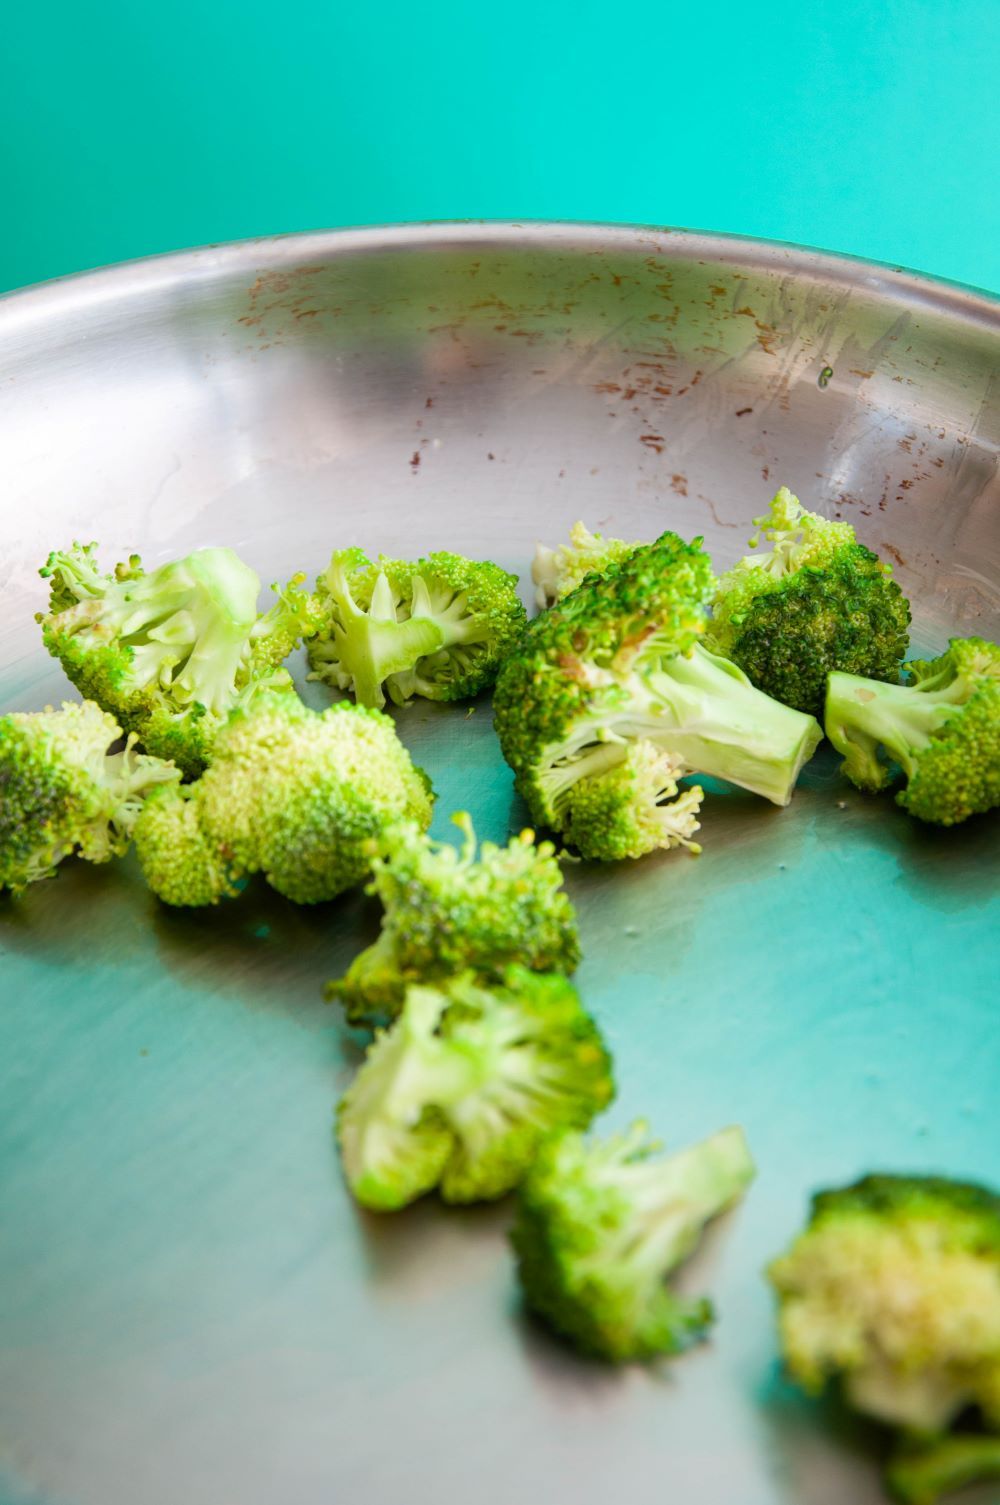 Stir-frying the broccoli